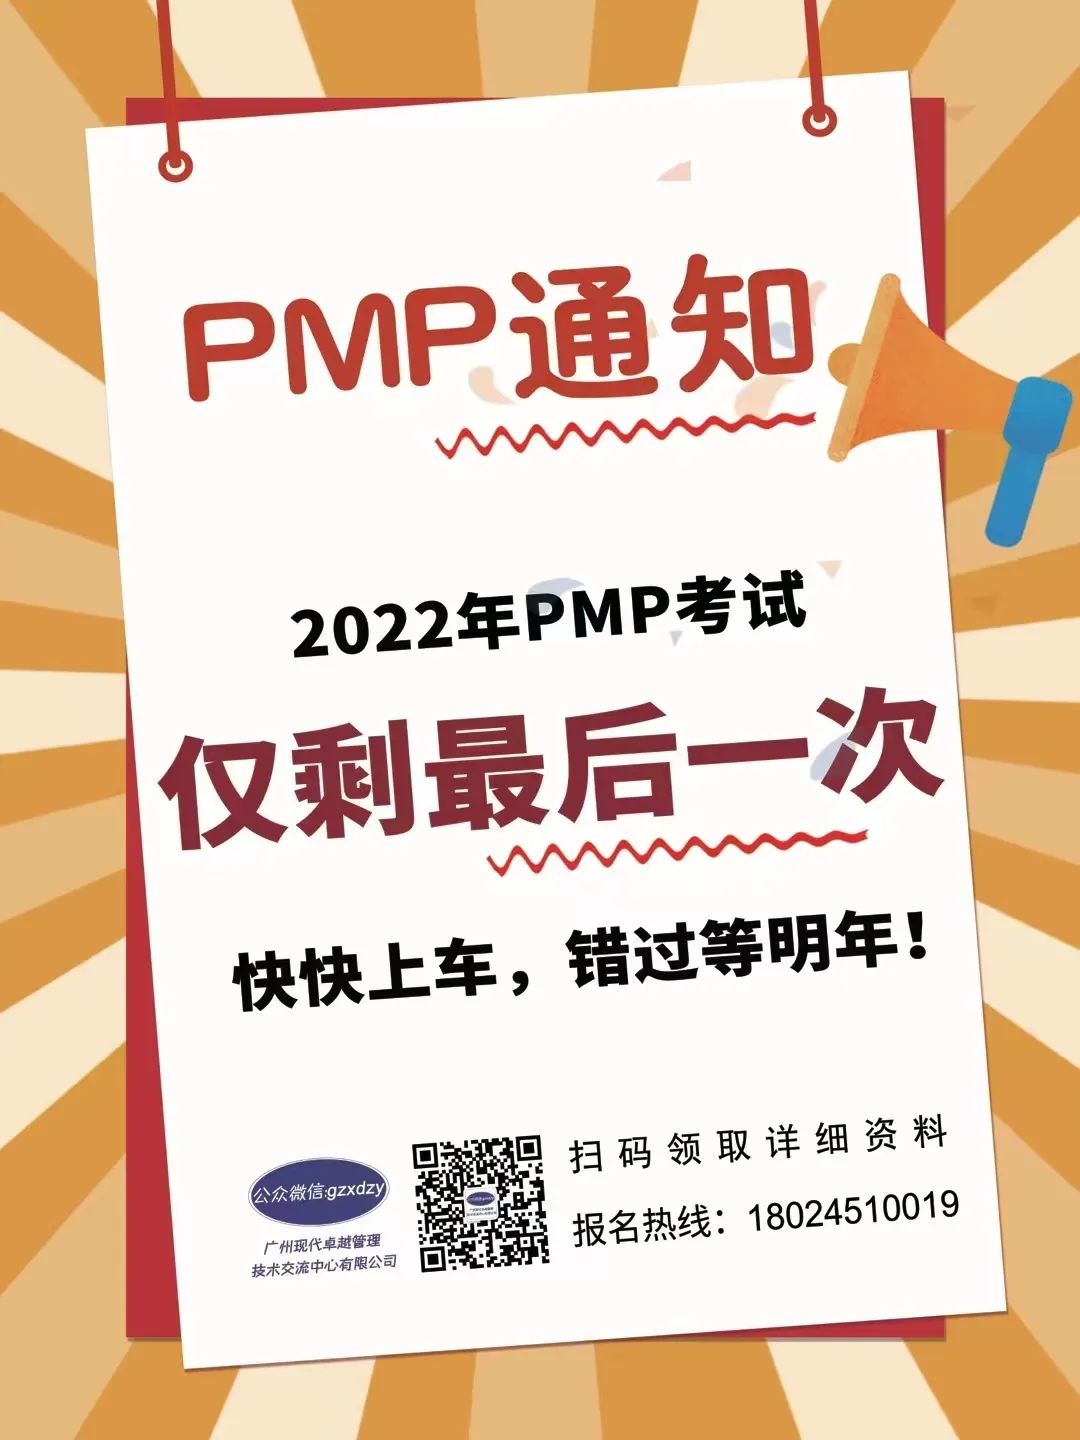 PMP项目管理工具-swot分析-WBS-时间管理-Smart原则-6W2H-PDCA